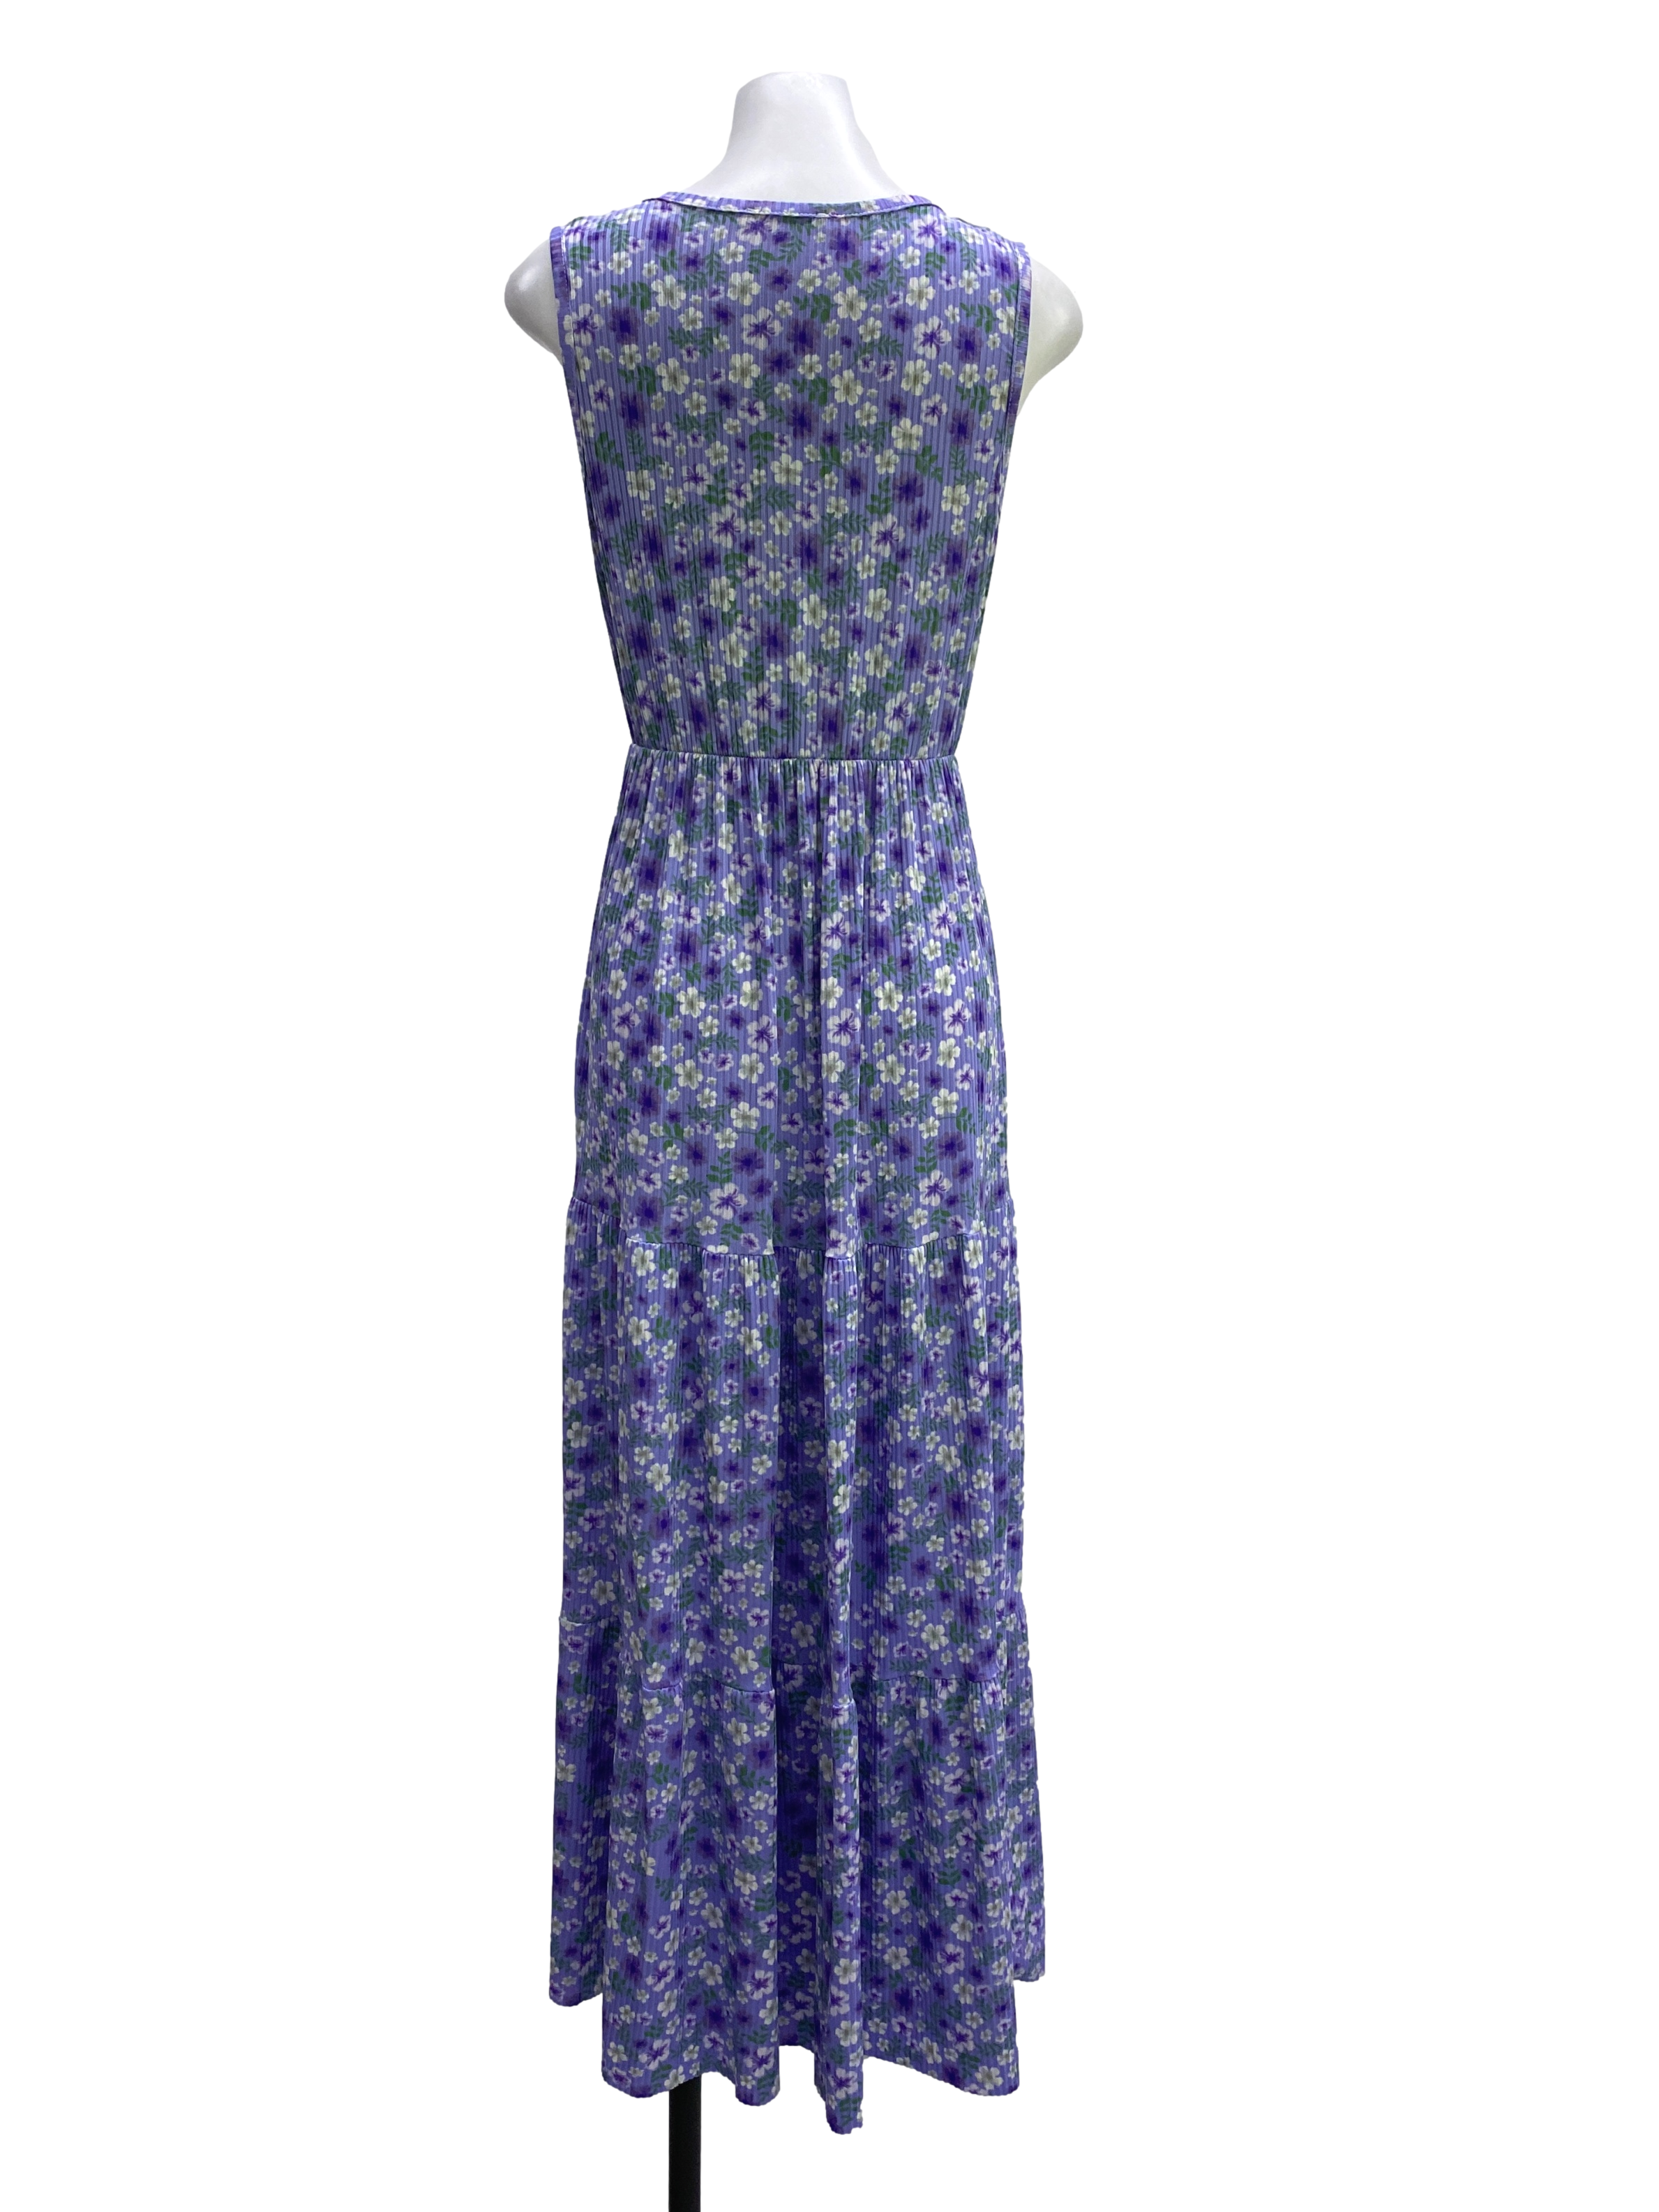 Medium Purple Floral Dress